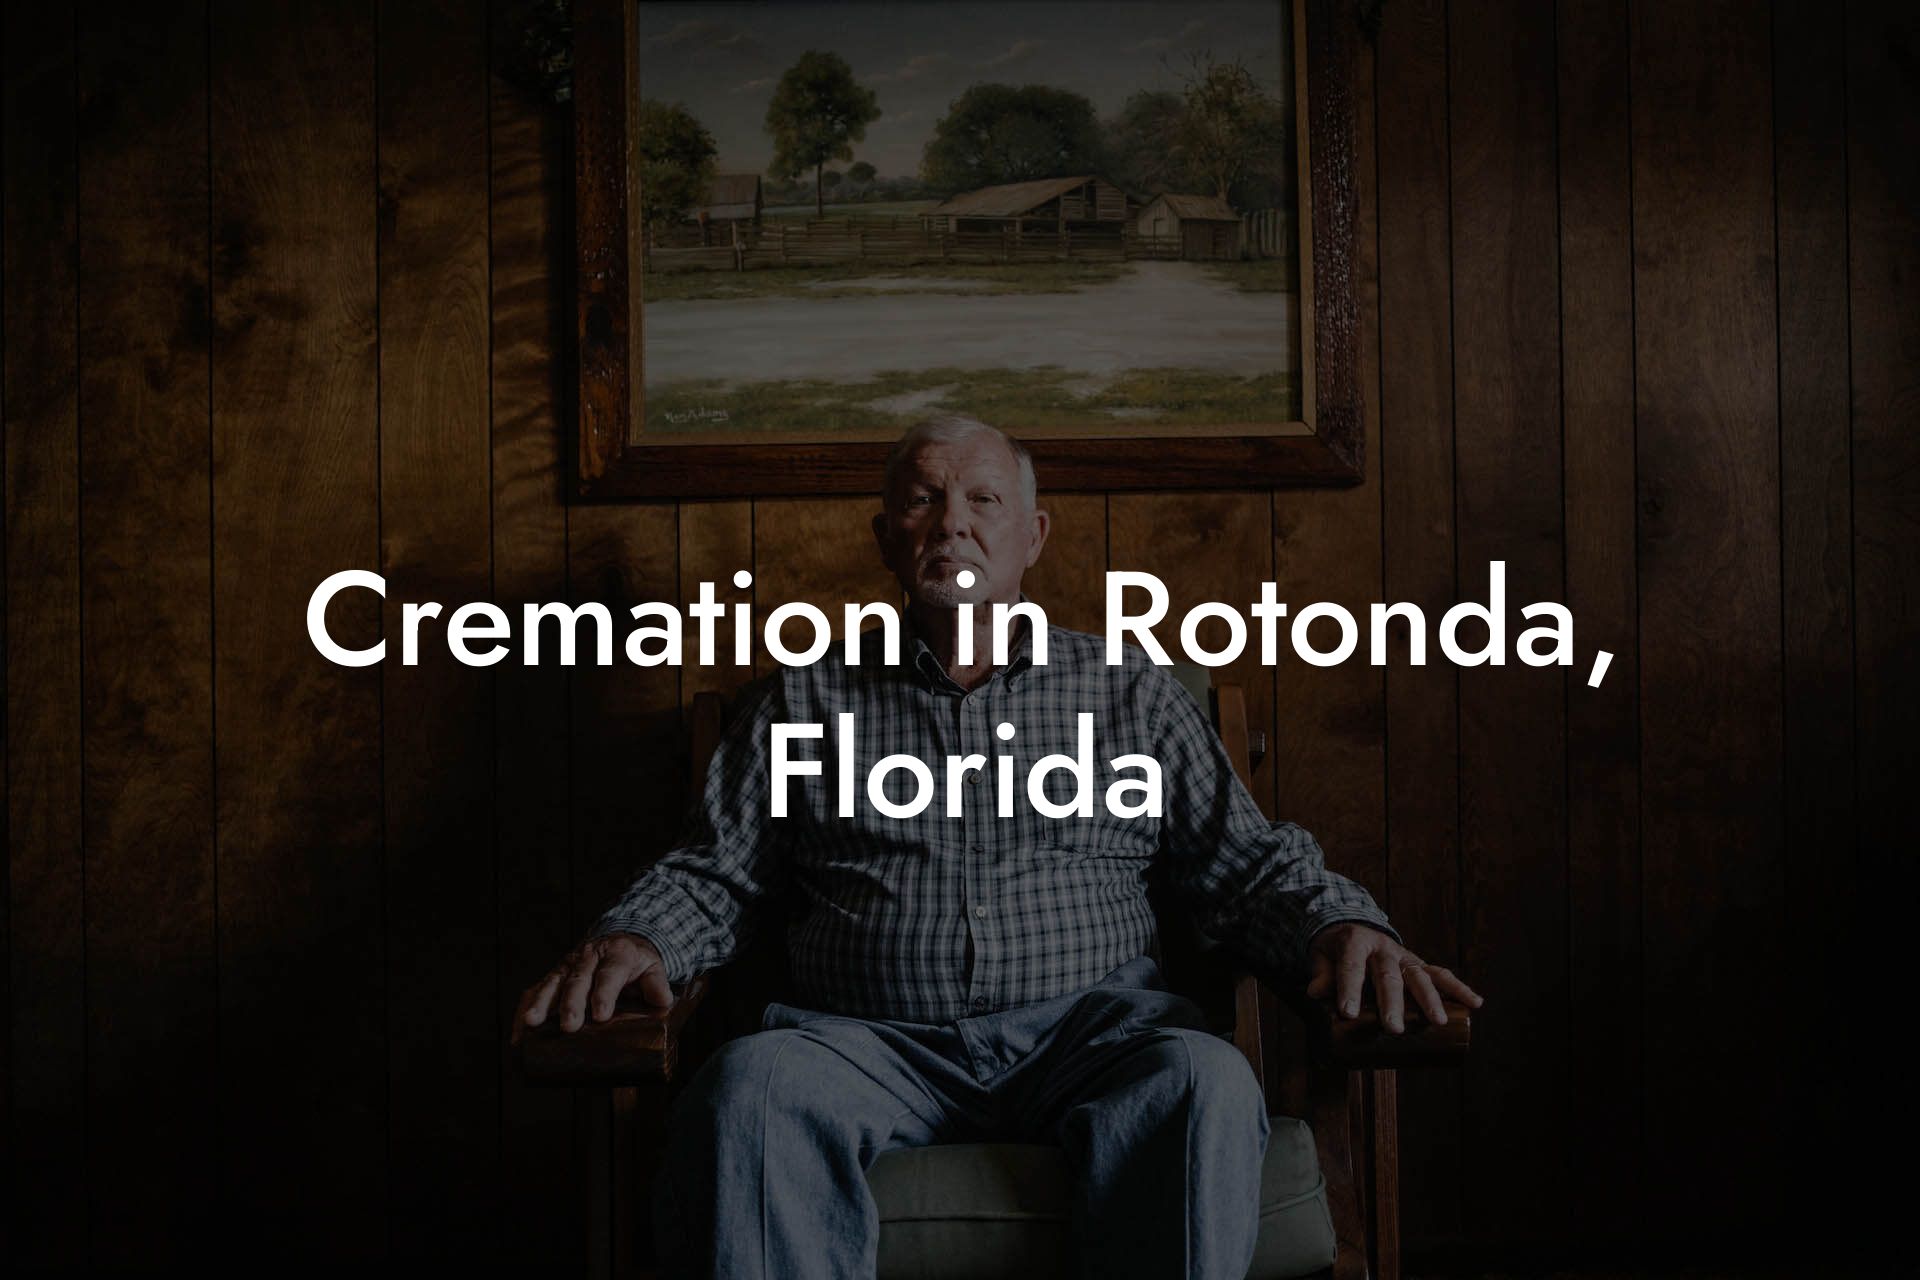 Cremation in Rotonda, Florida